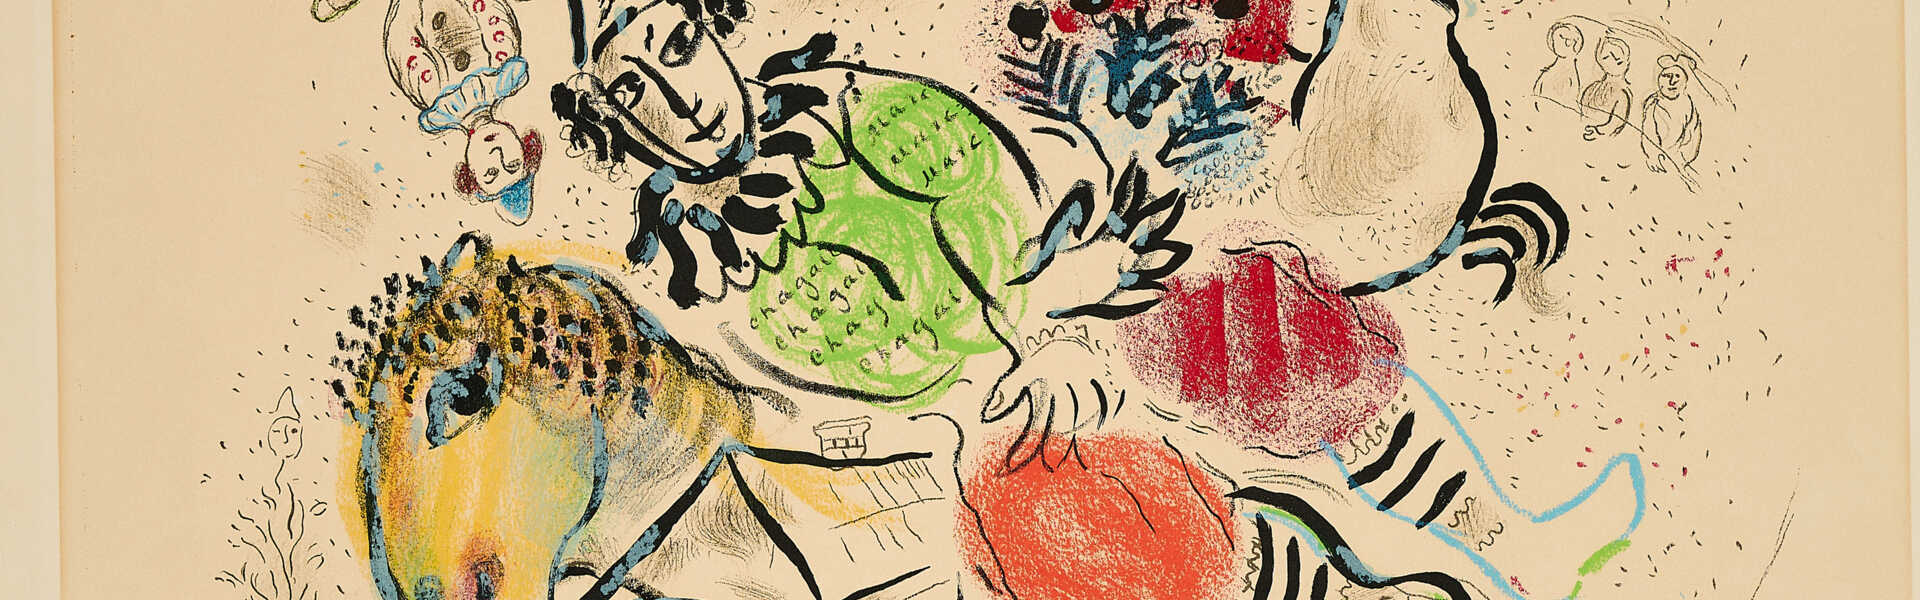 Marc Chagall. Le cirque ambulant